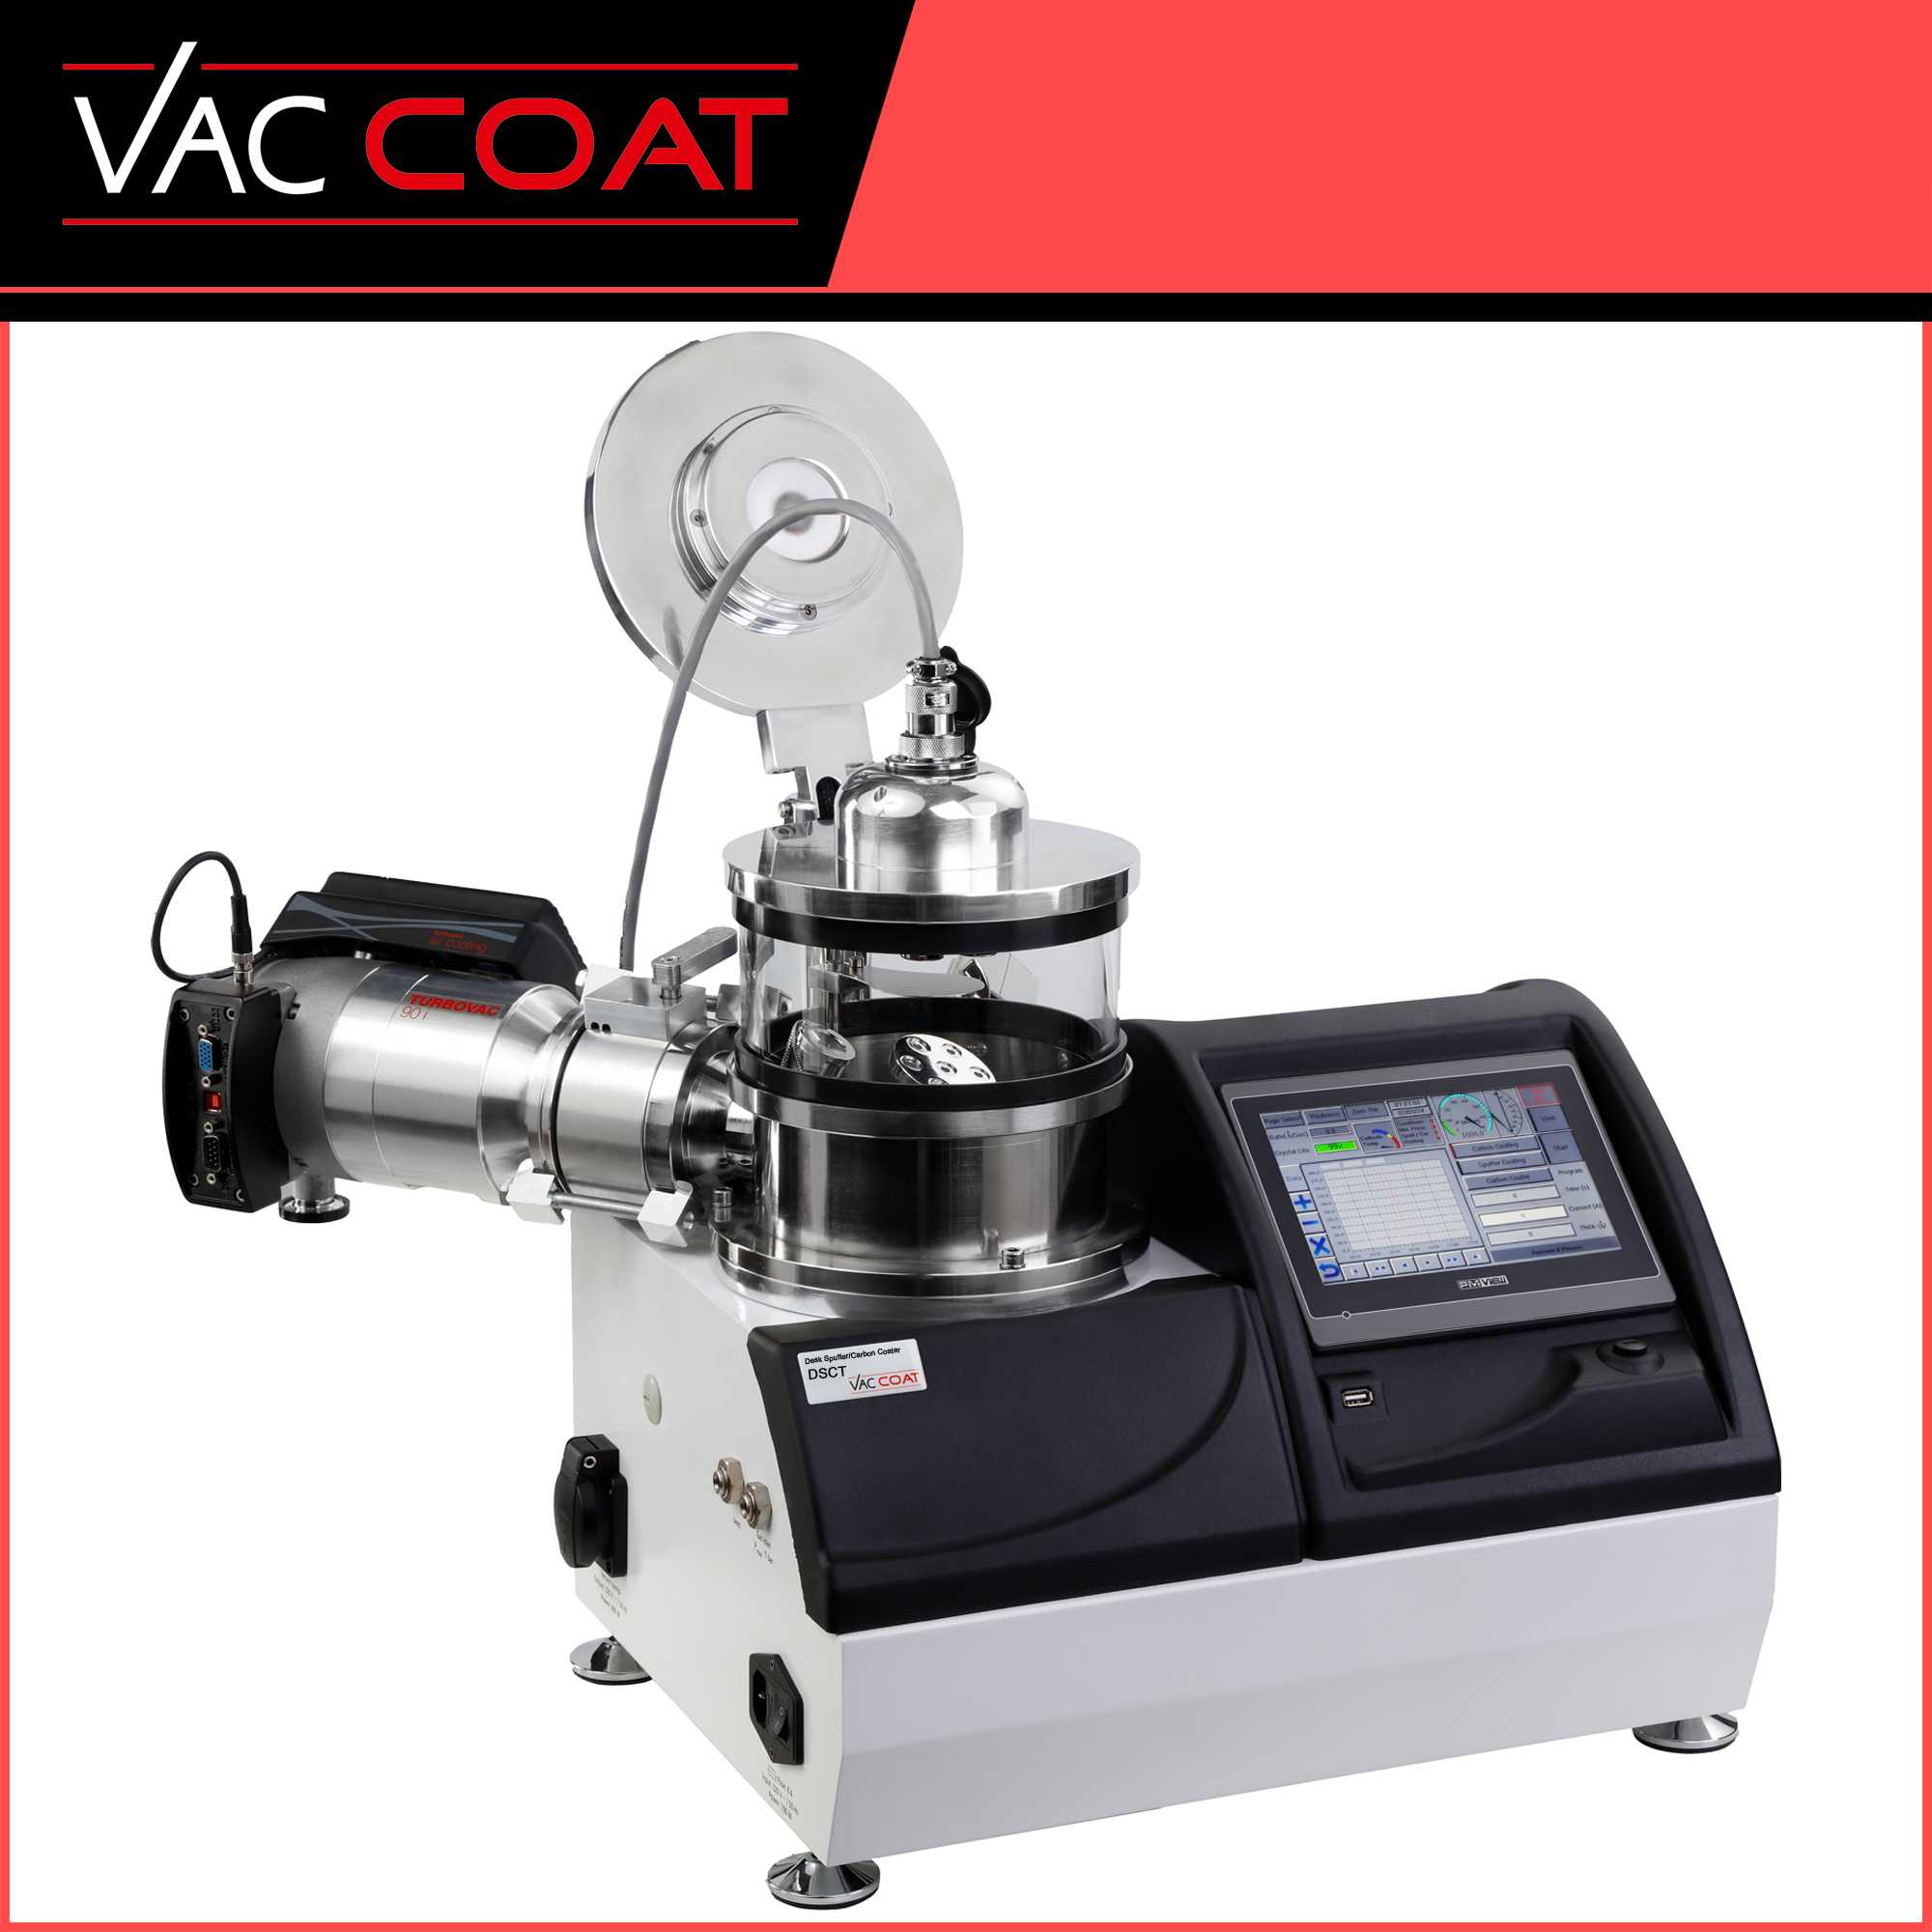 VacCoat - Physical Vapor Deposition (PVD)